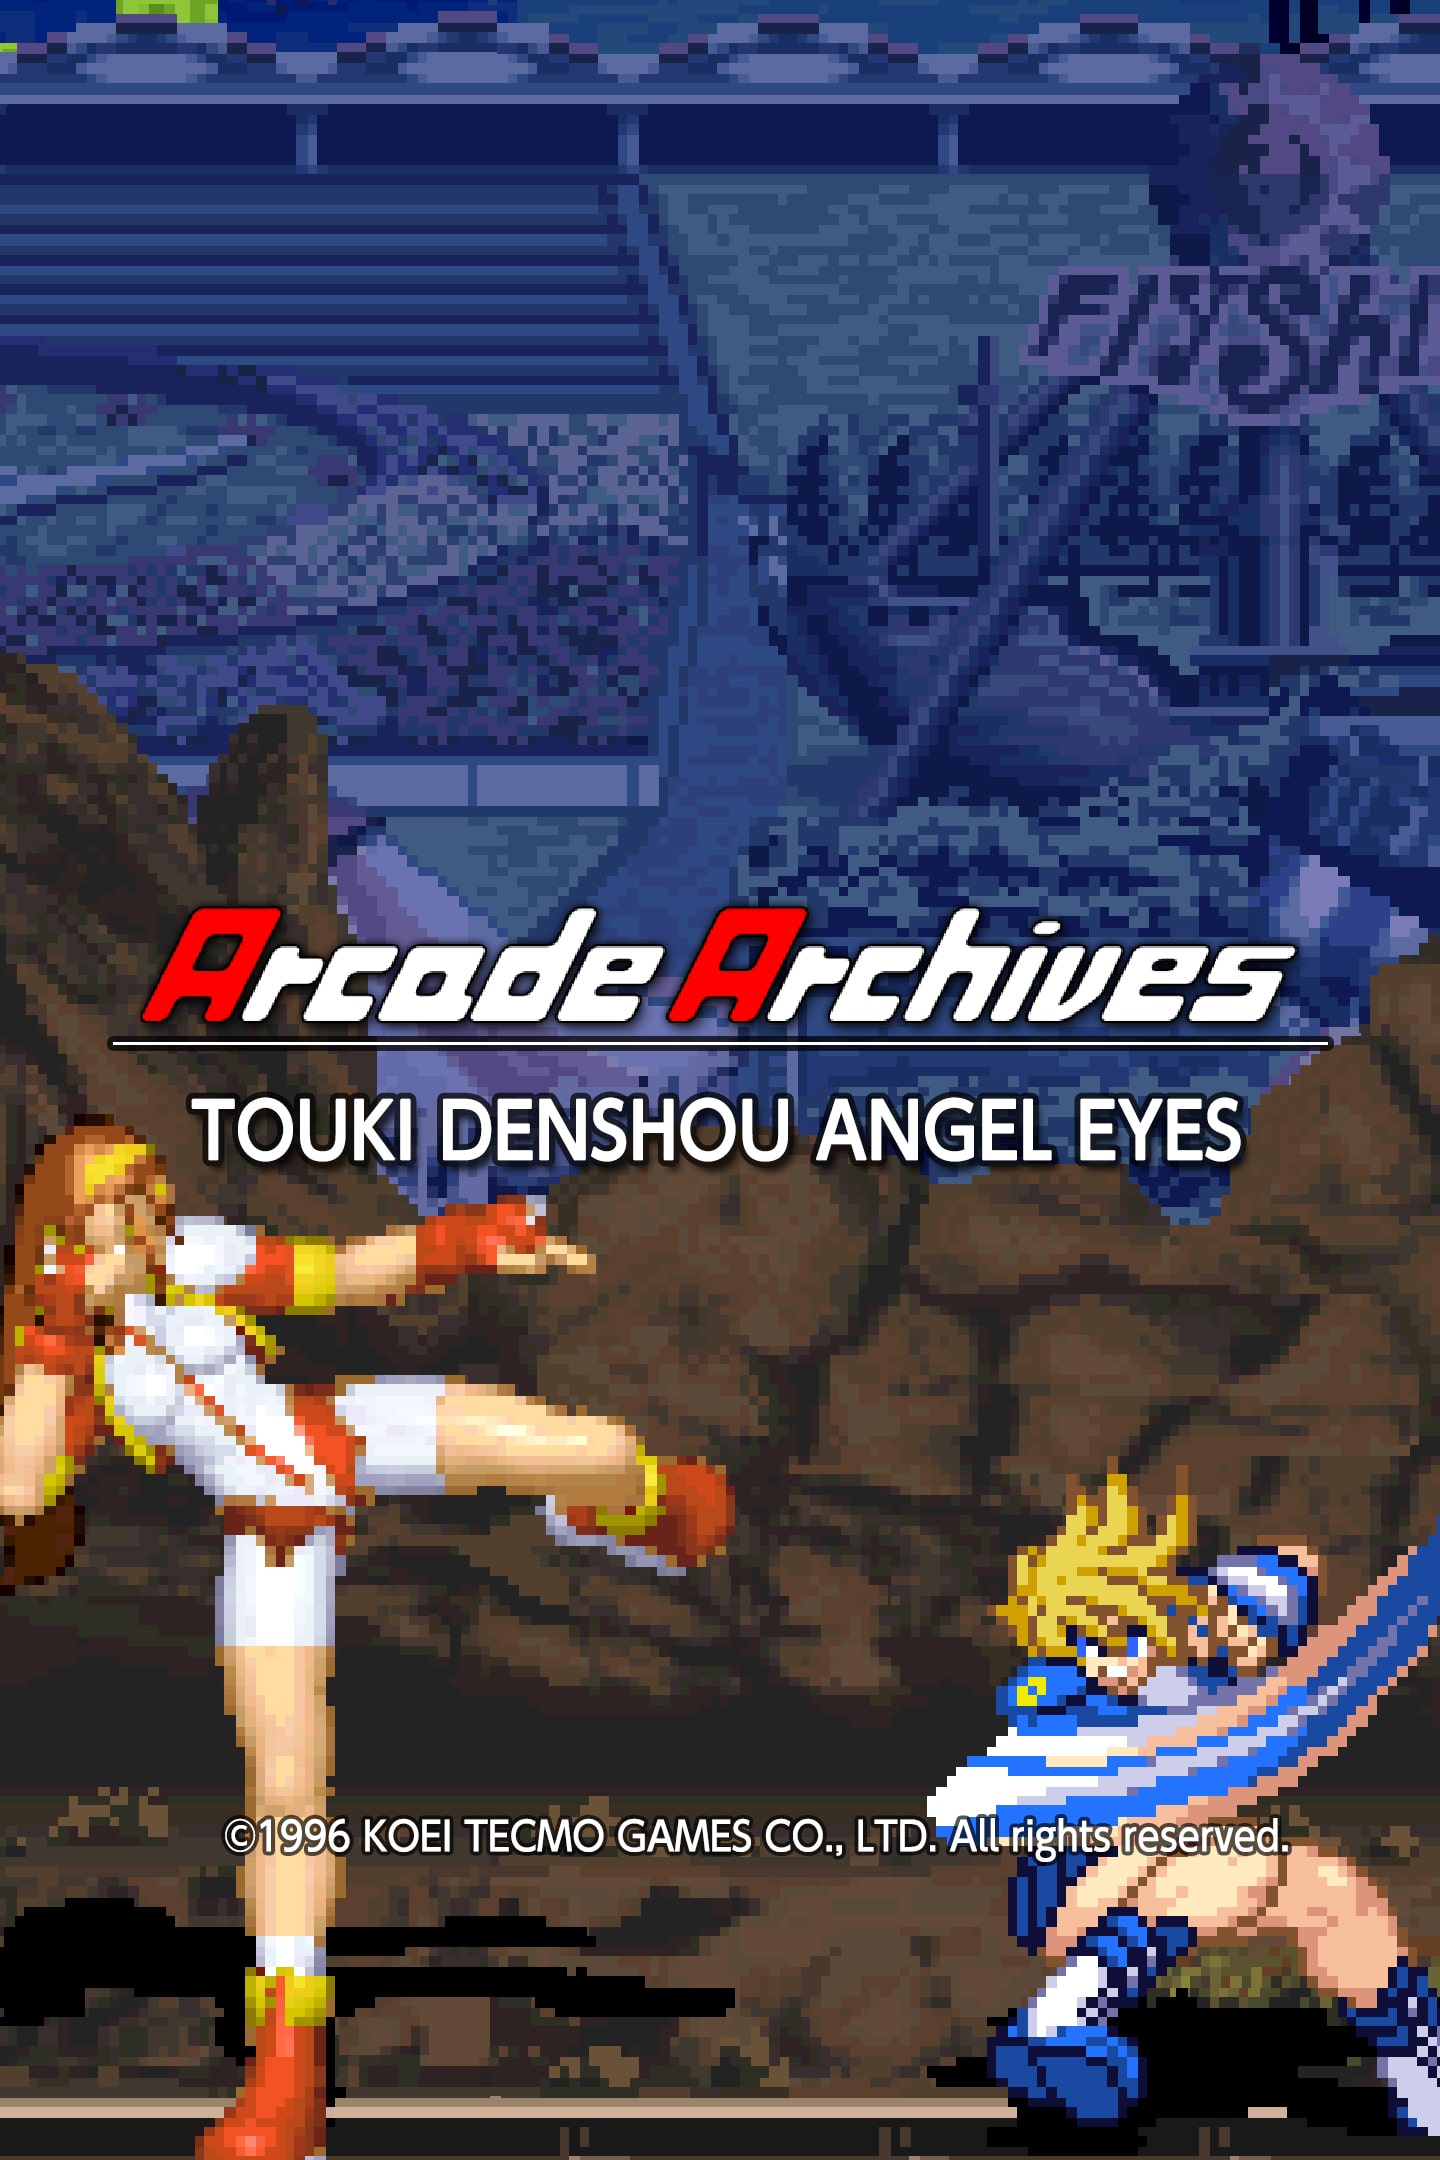 Arcade Archives TOUKI DENSHOU ANGEL EYES